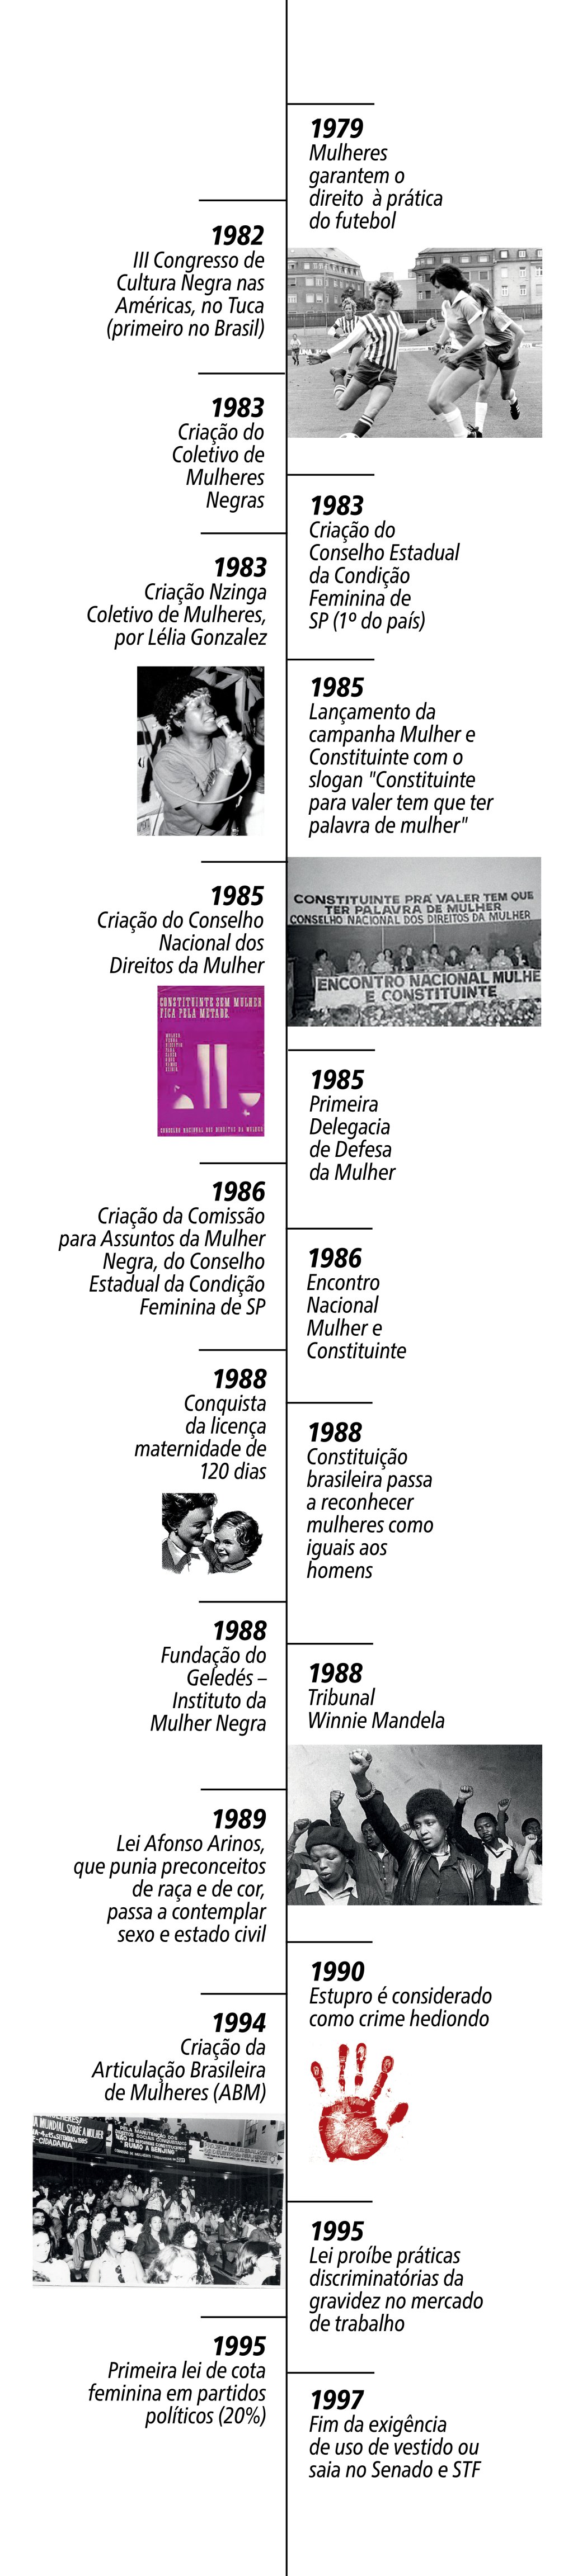 Mulheres na política brasileira